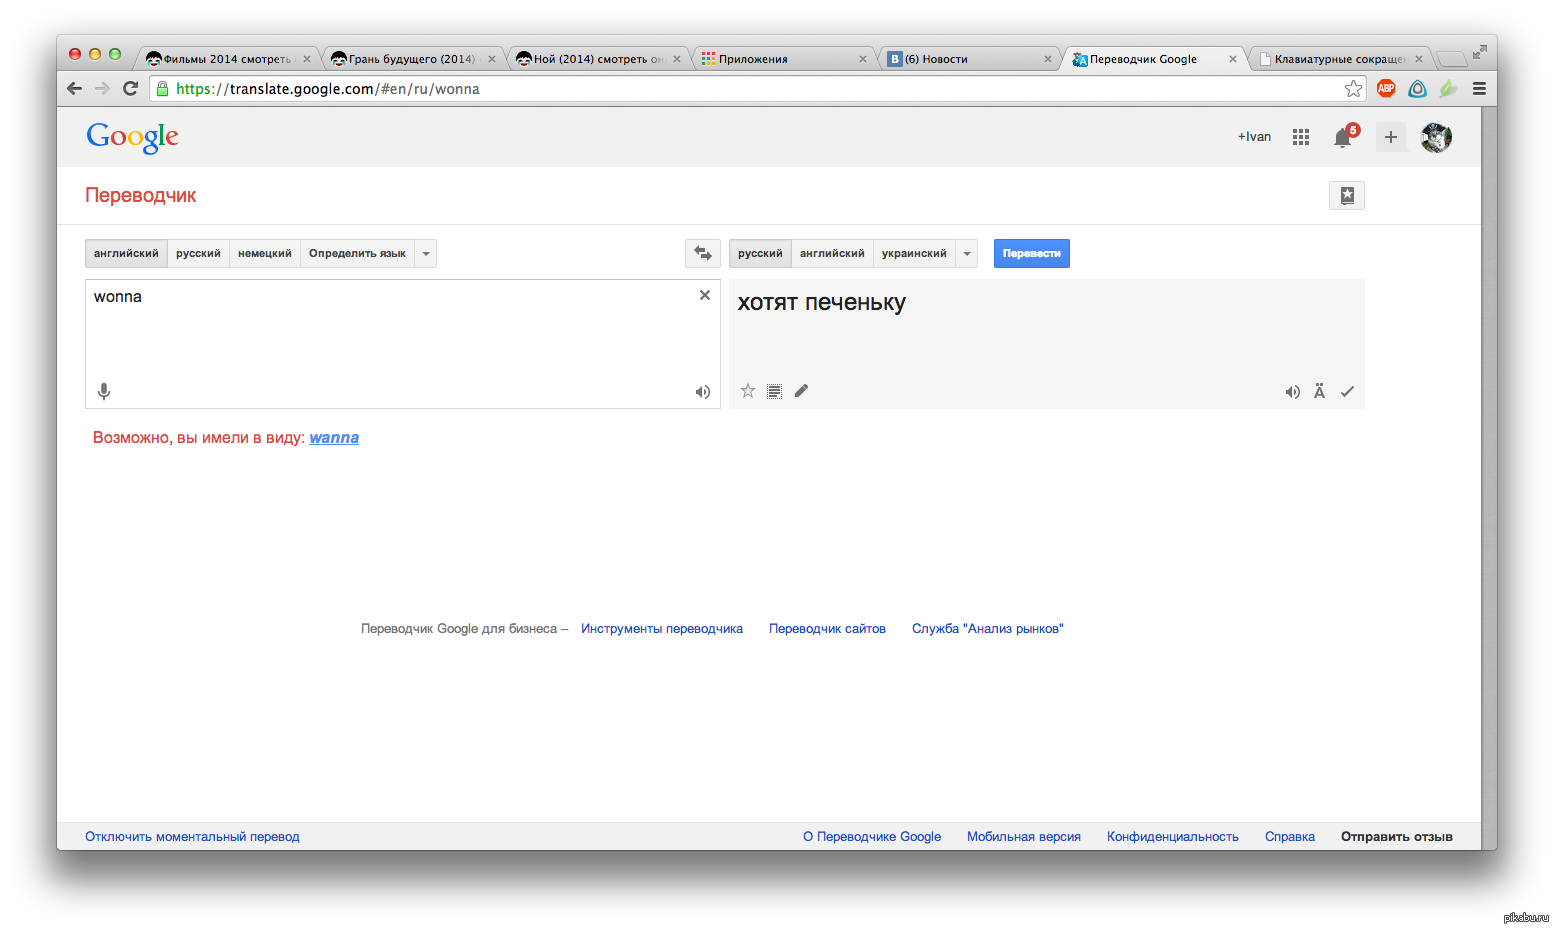 Https перевод на русский язык. Perevodchik v Google. Гугл переводчик по фото. Translate.com переводчик. Гугл возможно вы имели ввиду.